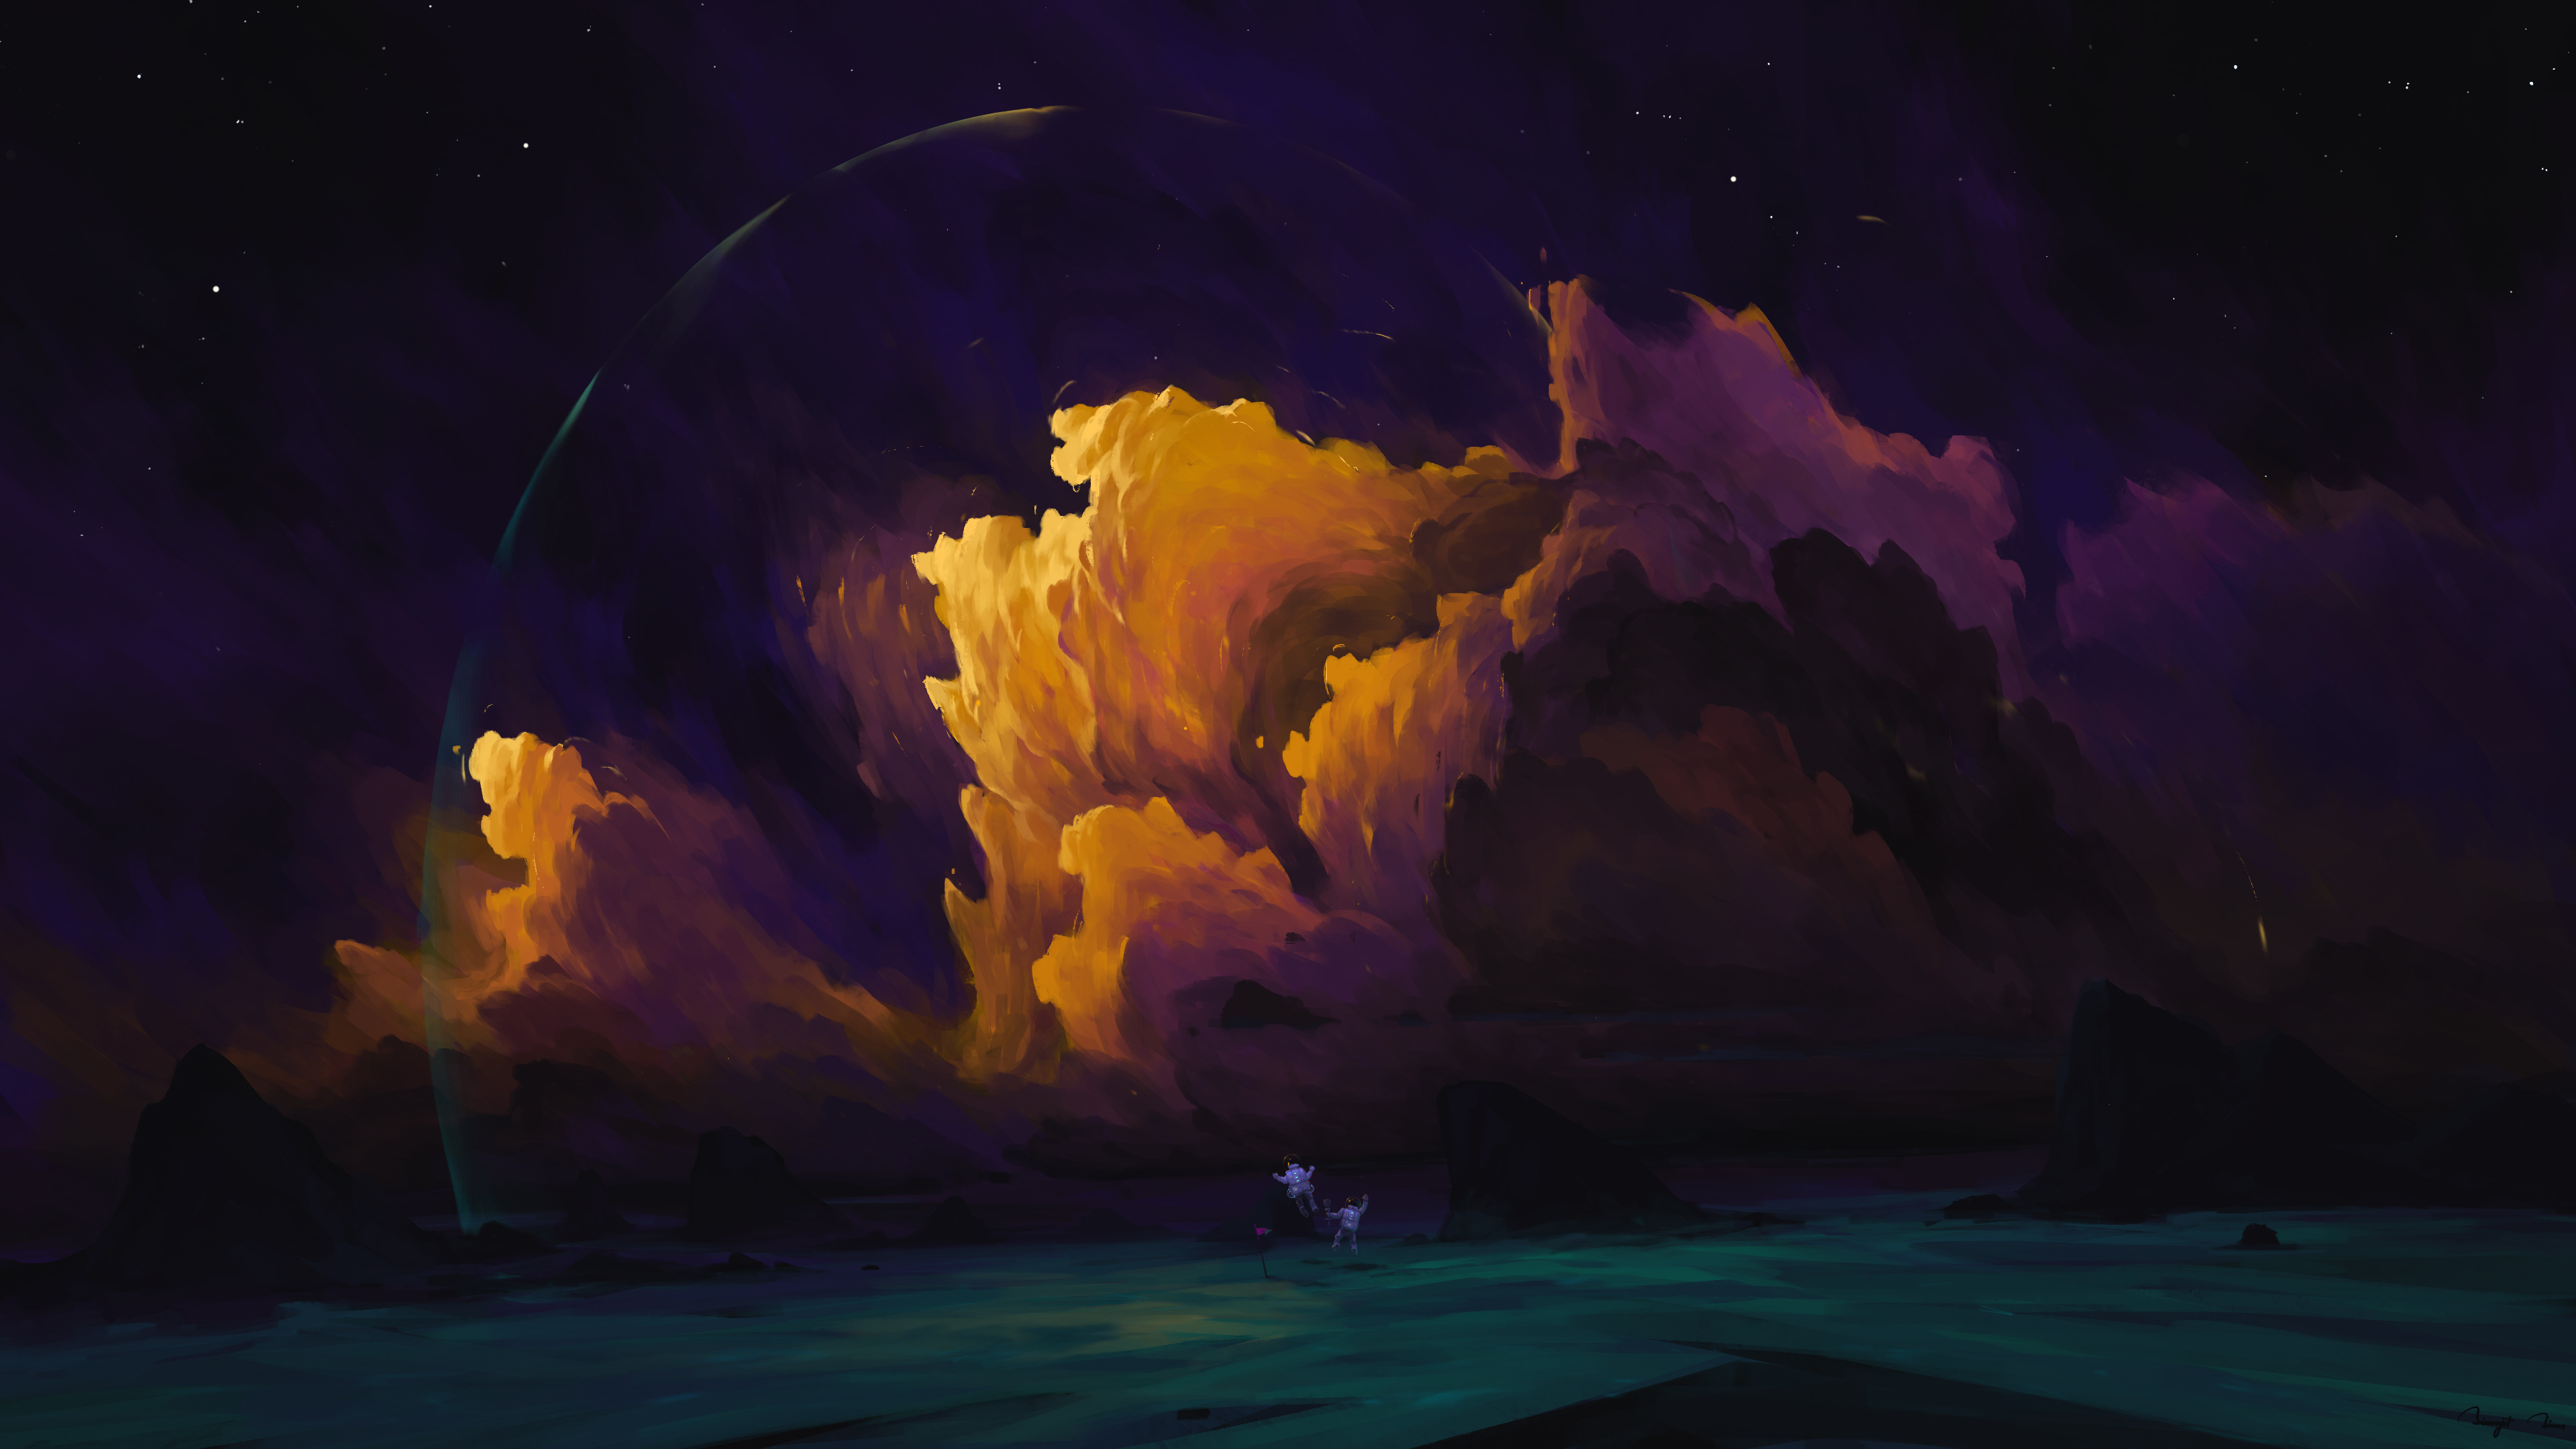 General 3840x2160 BisBiswas digital art artwork illustration landscape clouds night nightscape sky stars astronaut signature 4K